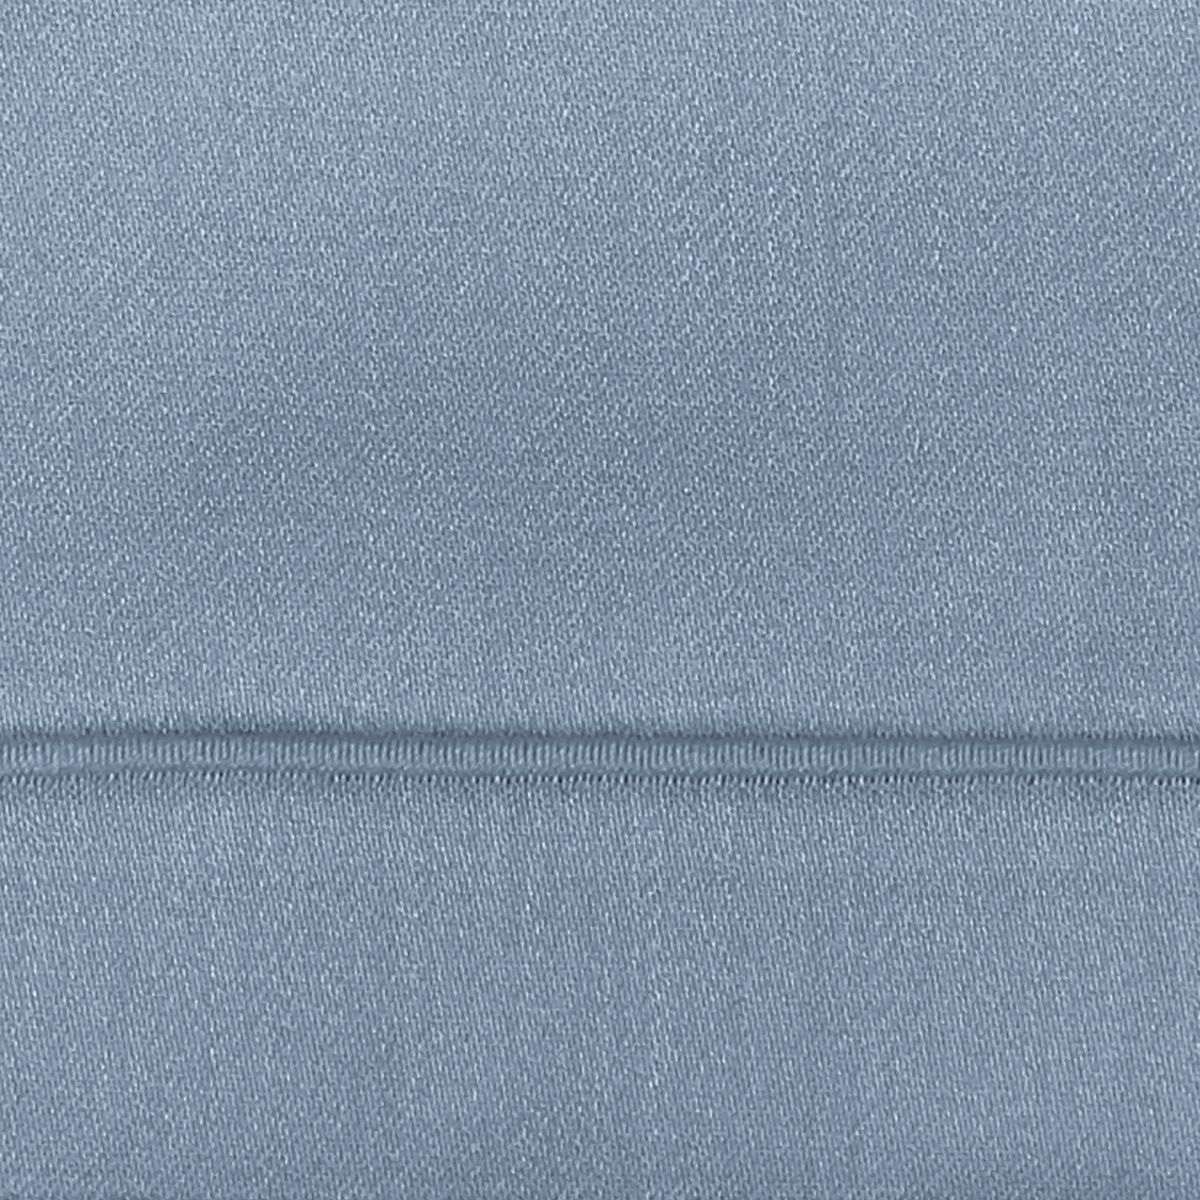 Matouk Talita Satin Stitch Bedding Swatch Hazy Blue Fine Linens